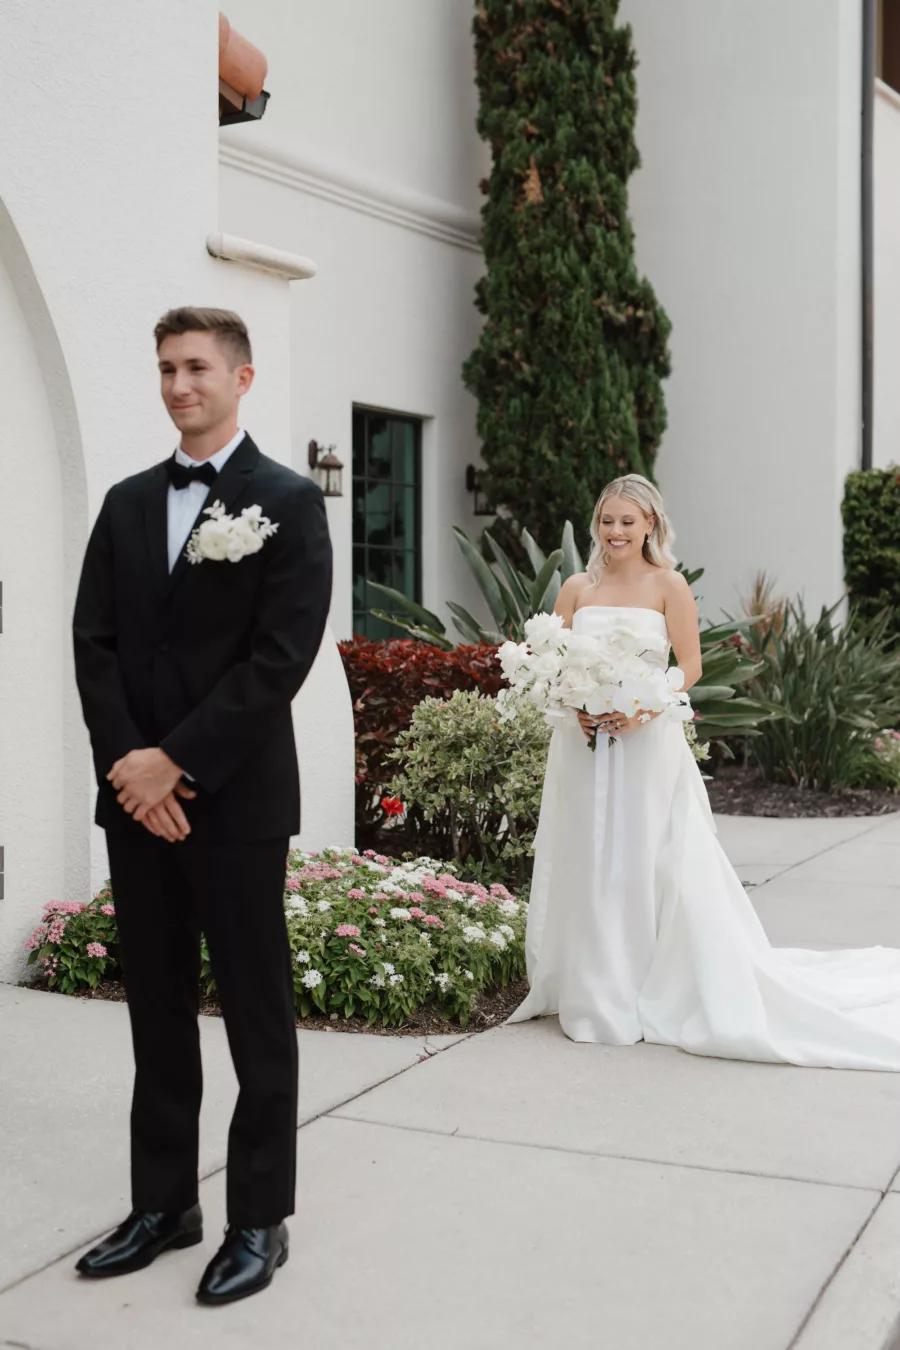 Bride and Groom First Look Wedding Portrait | Tampa Bay Event Venue Westshore Yacht Club